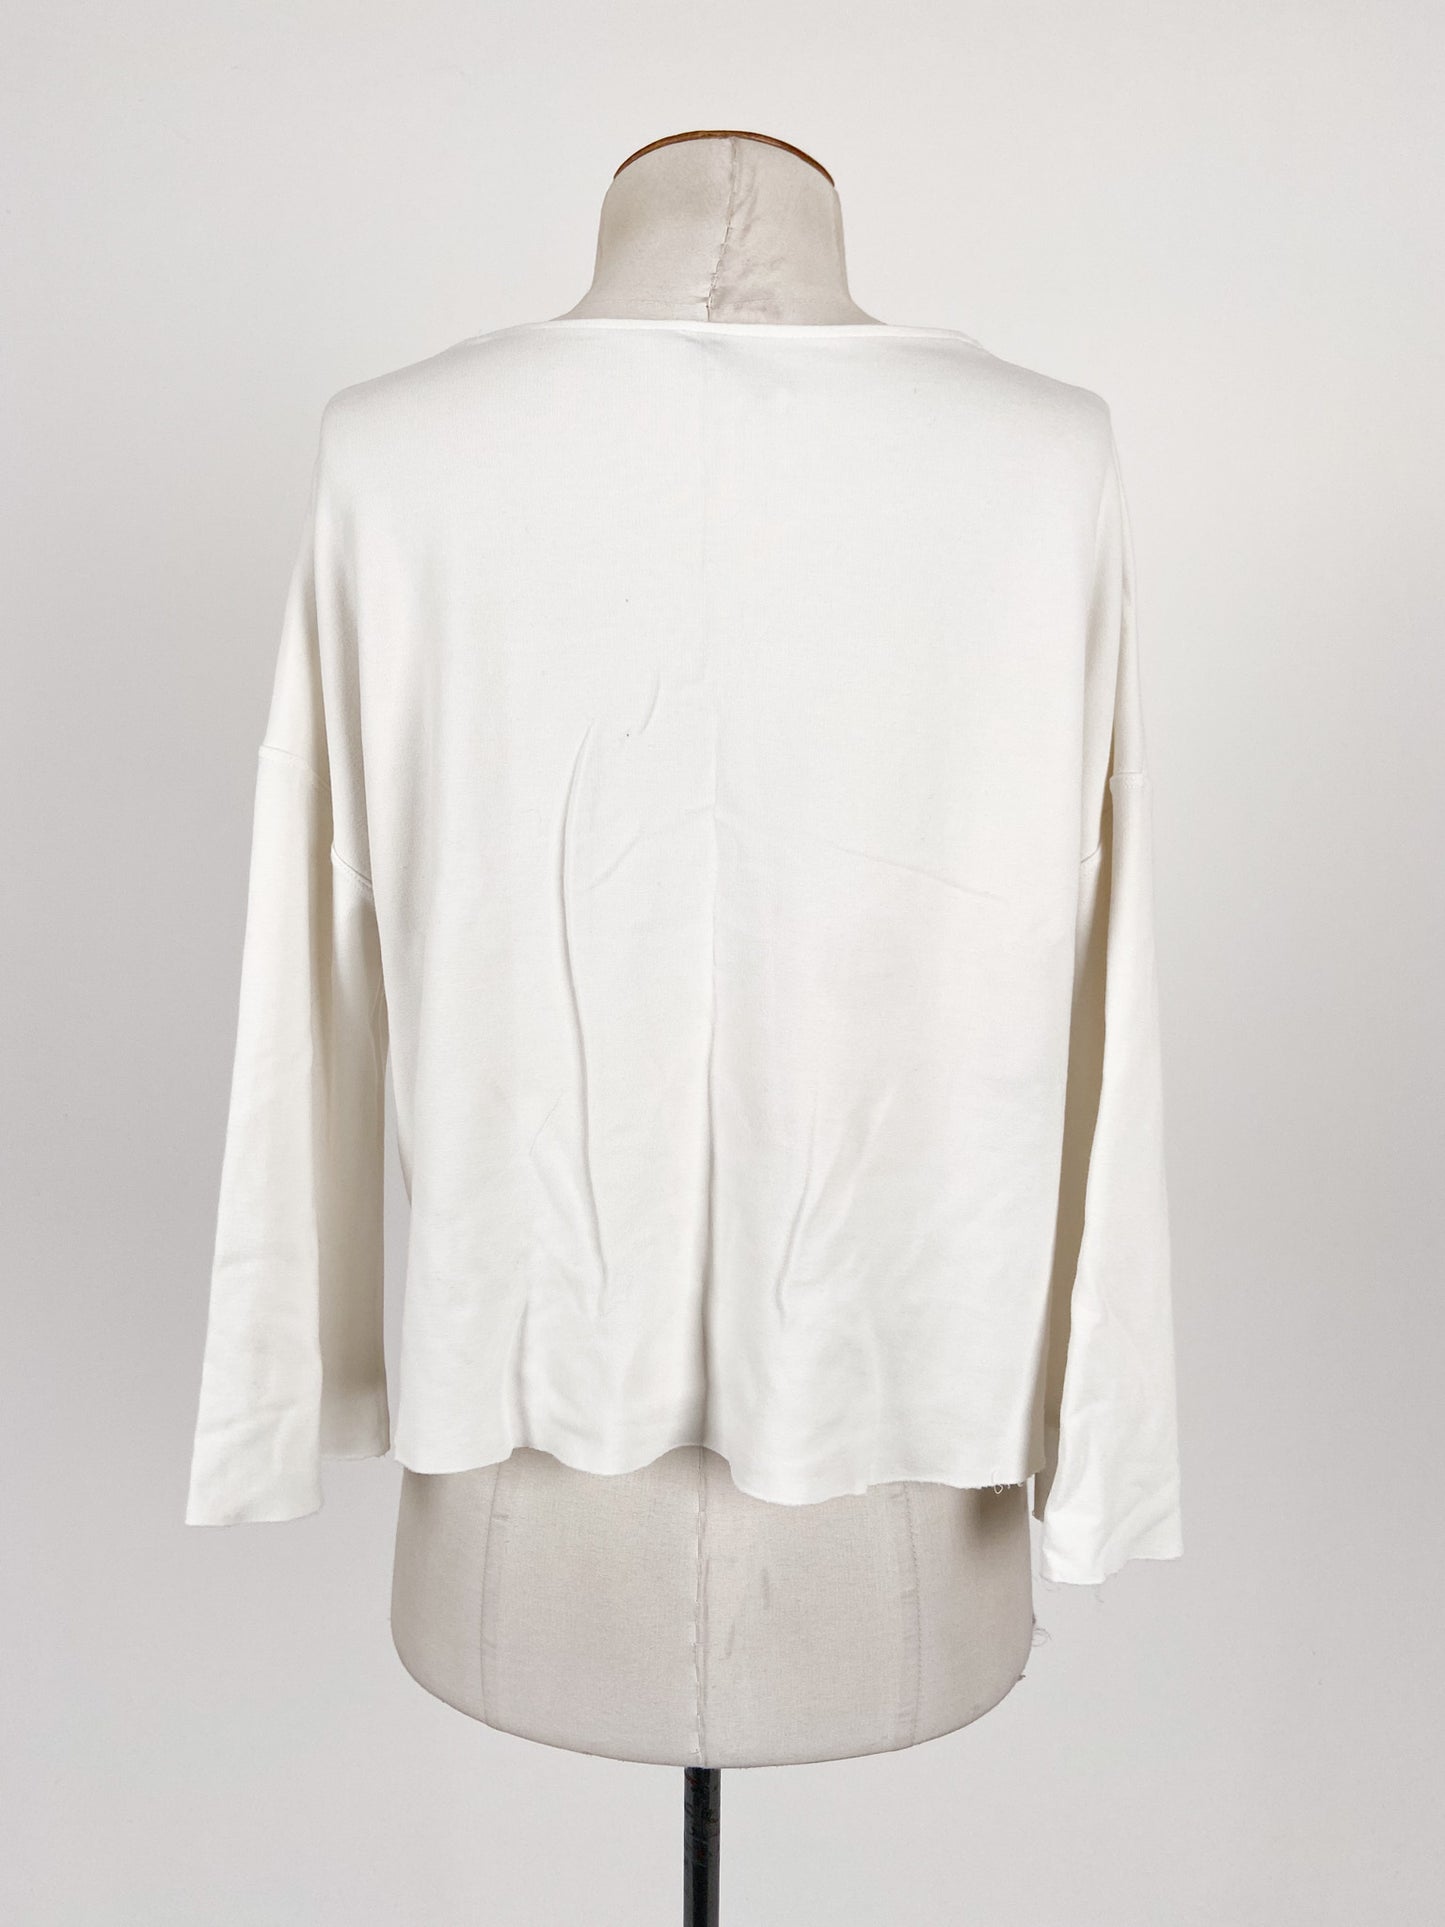 Zara | White Casual/Workwear Top | Size M